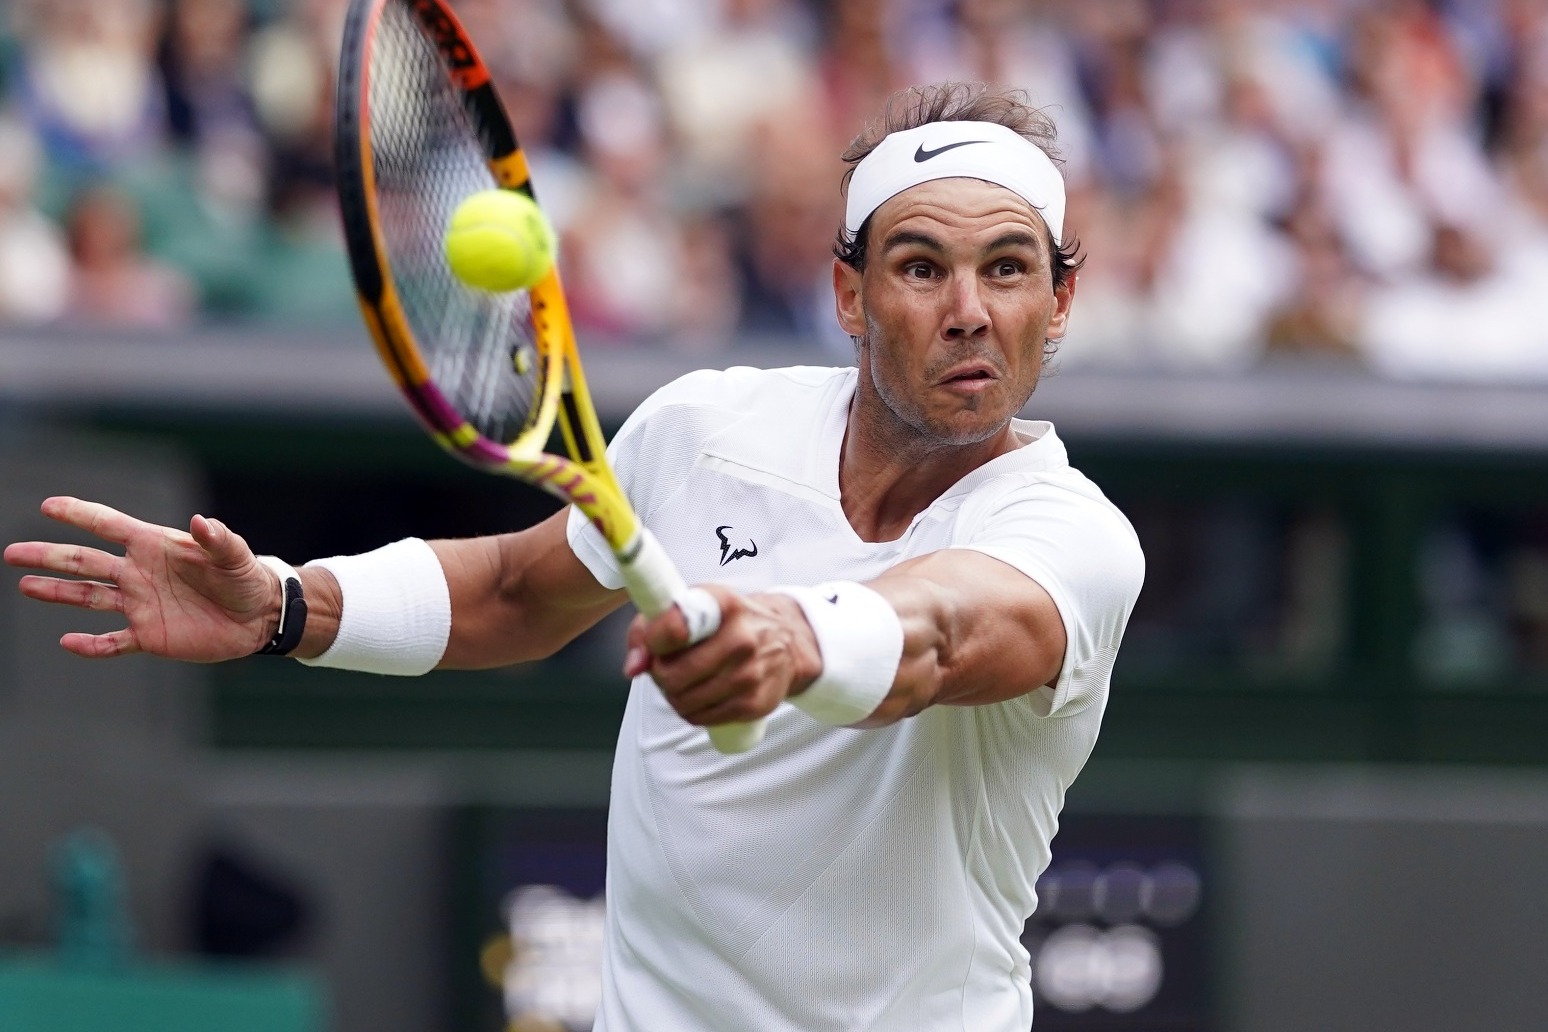 Rafael Nadal’s calendar slam bid over as he withdraws from Wimbledon with injury 